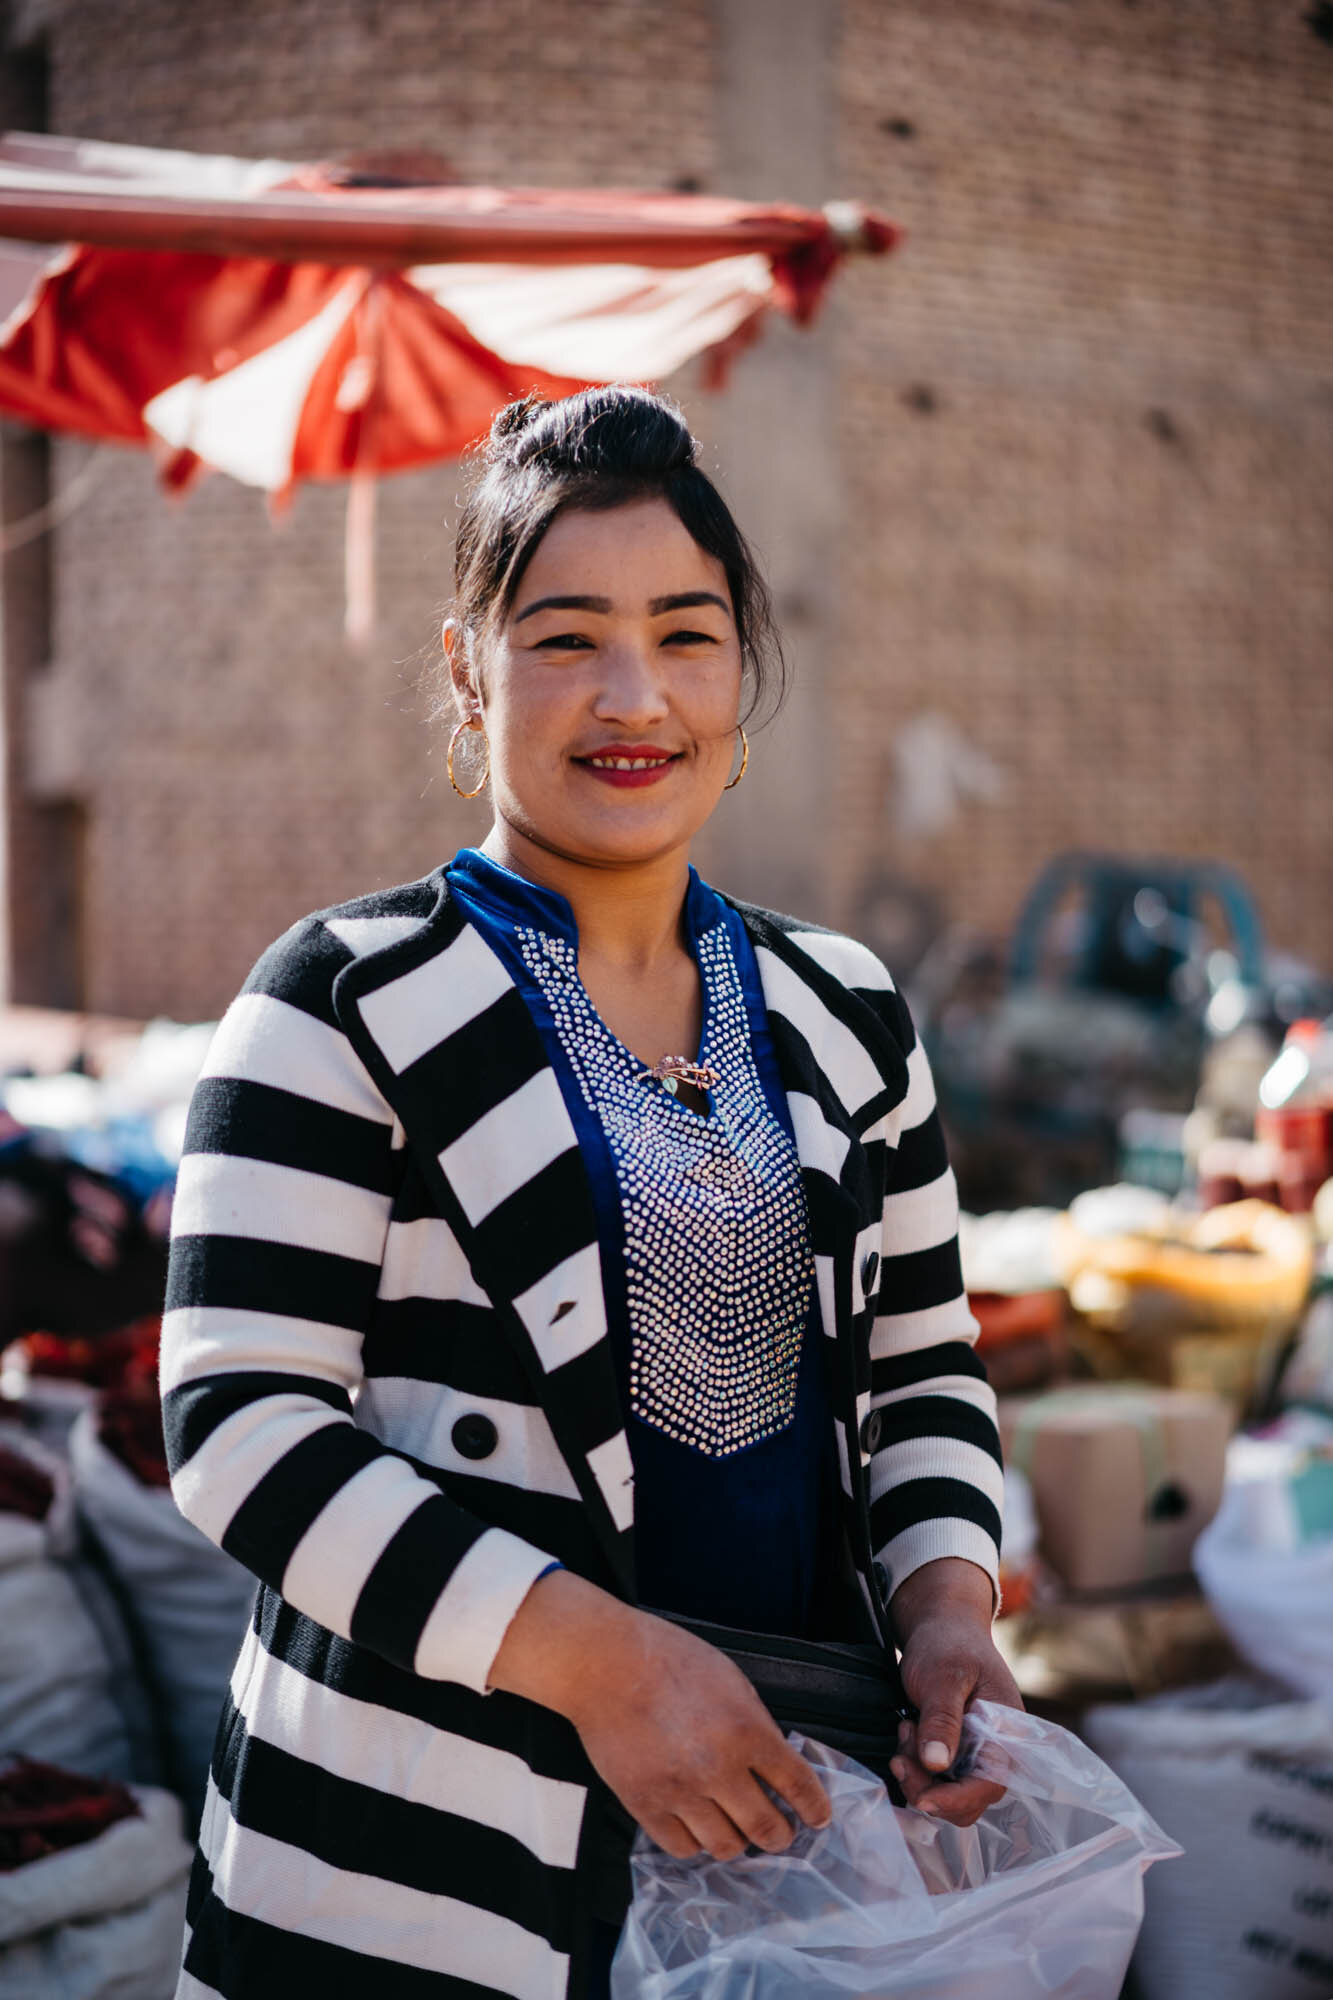  A Uyghur shopkeeper at the bazaar 